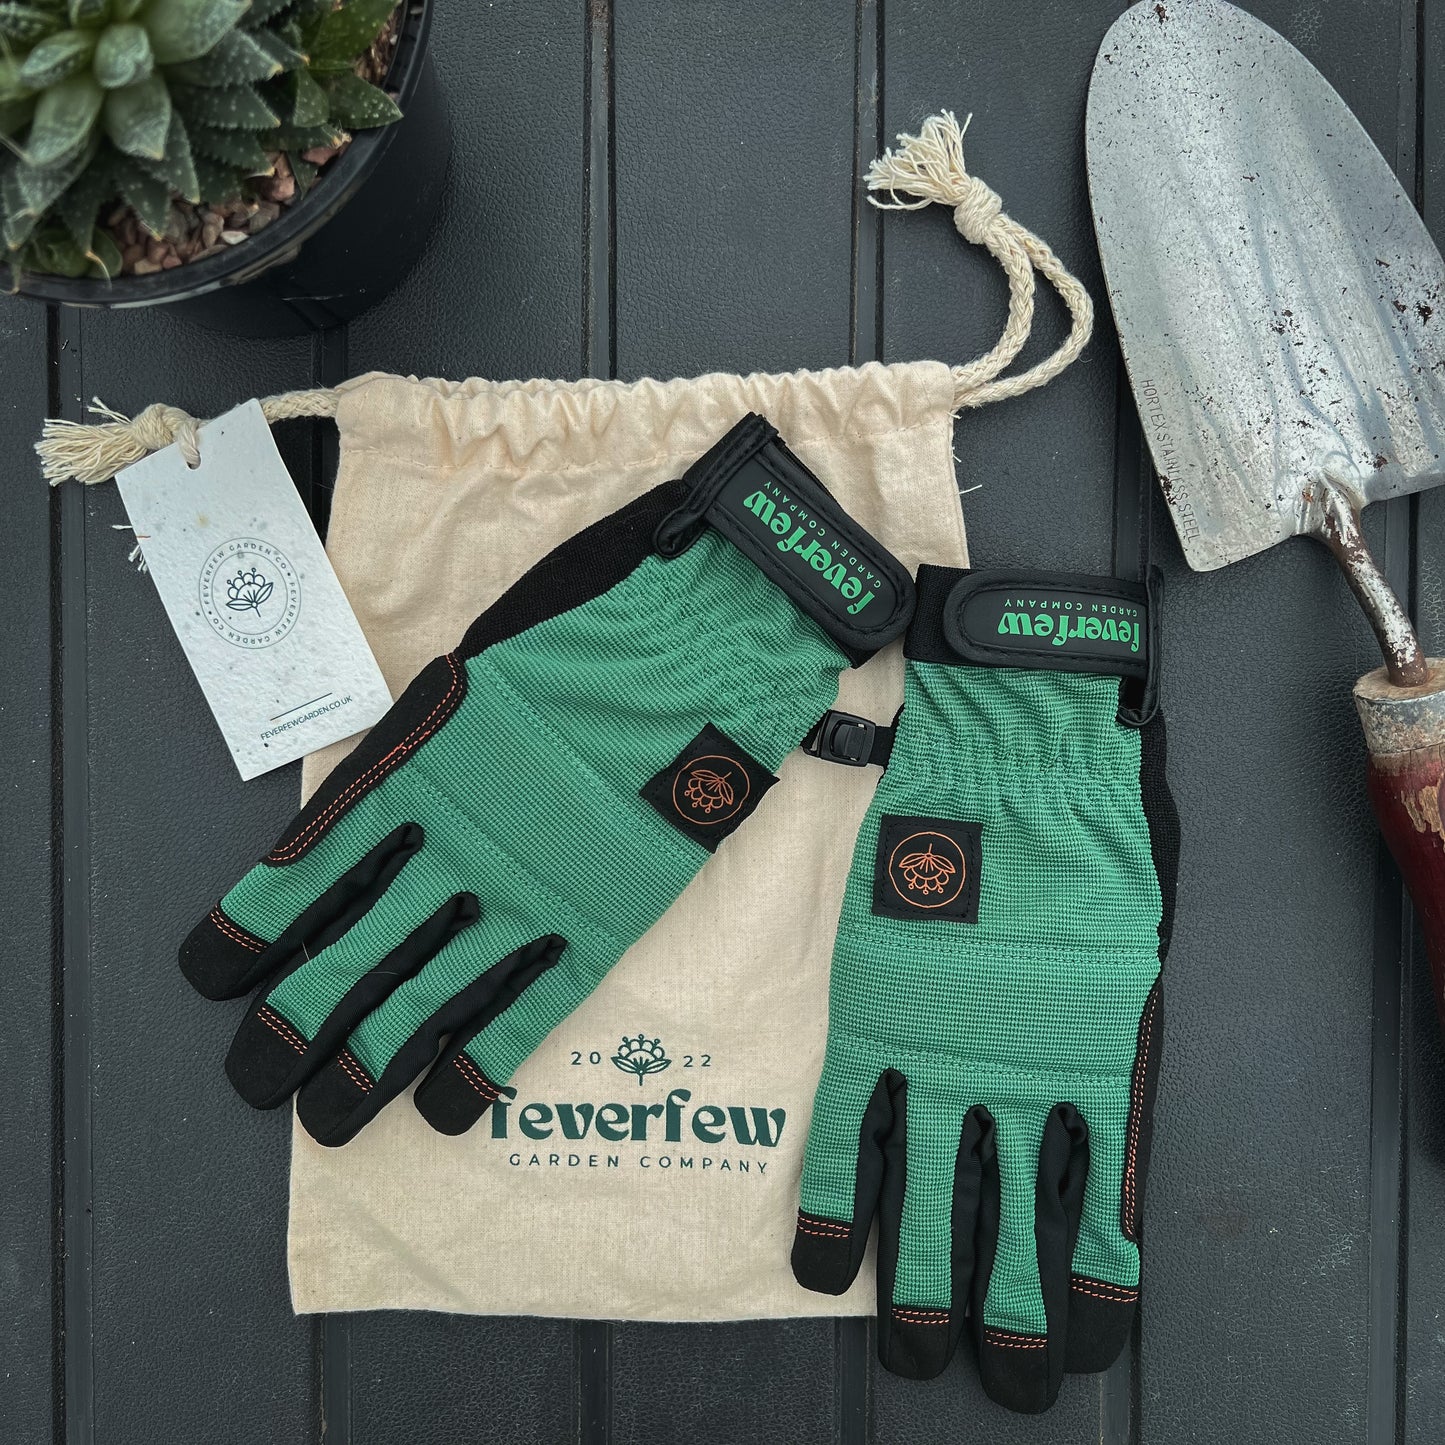 Feverfew Original Women’s Gardening Gloves